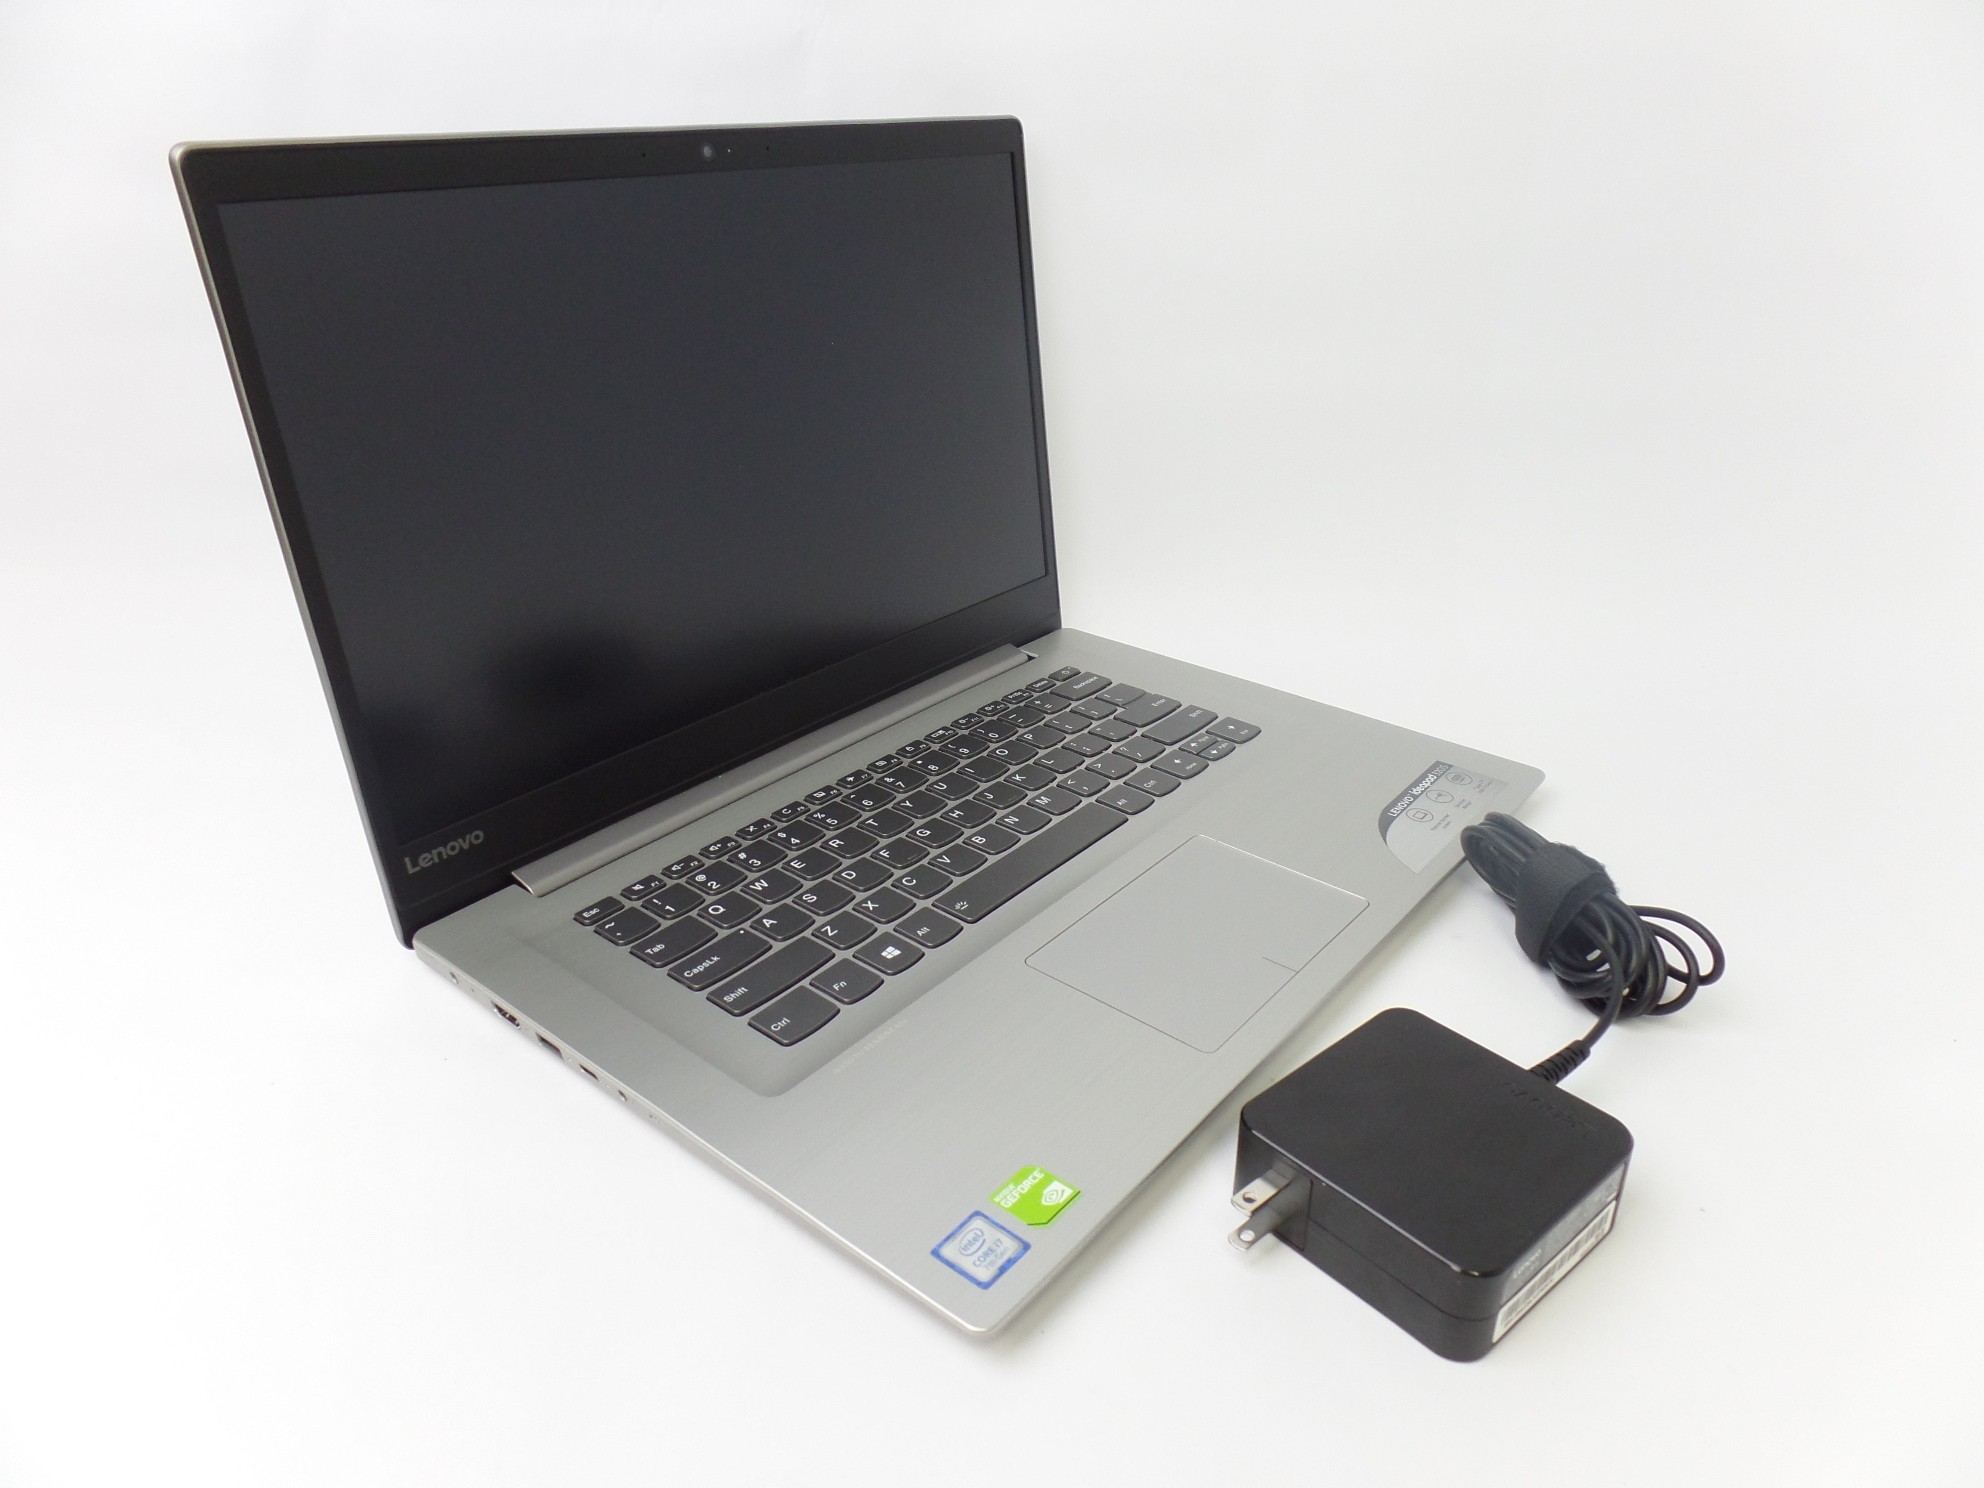 Lenovo 320S-15IKB 15.6" FHD IPS i7-7500U 2.7GHz 8GB 1TB HDD GF 940MX W10H Laptop